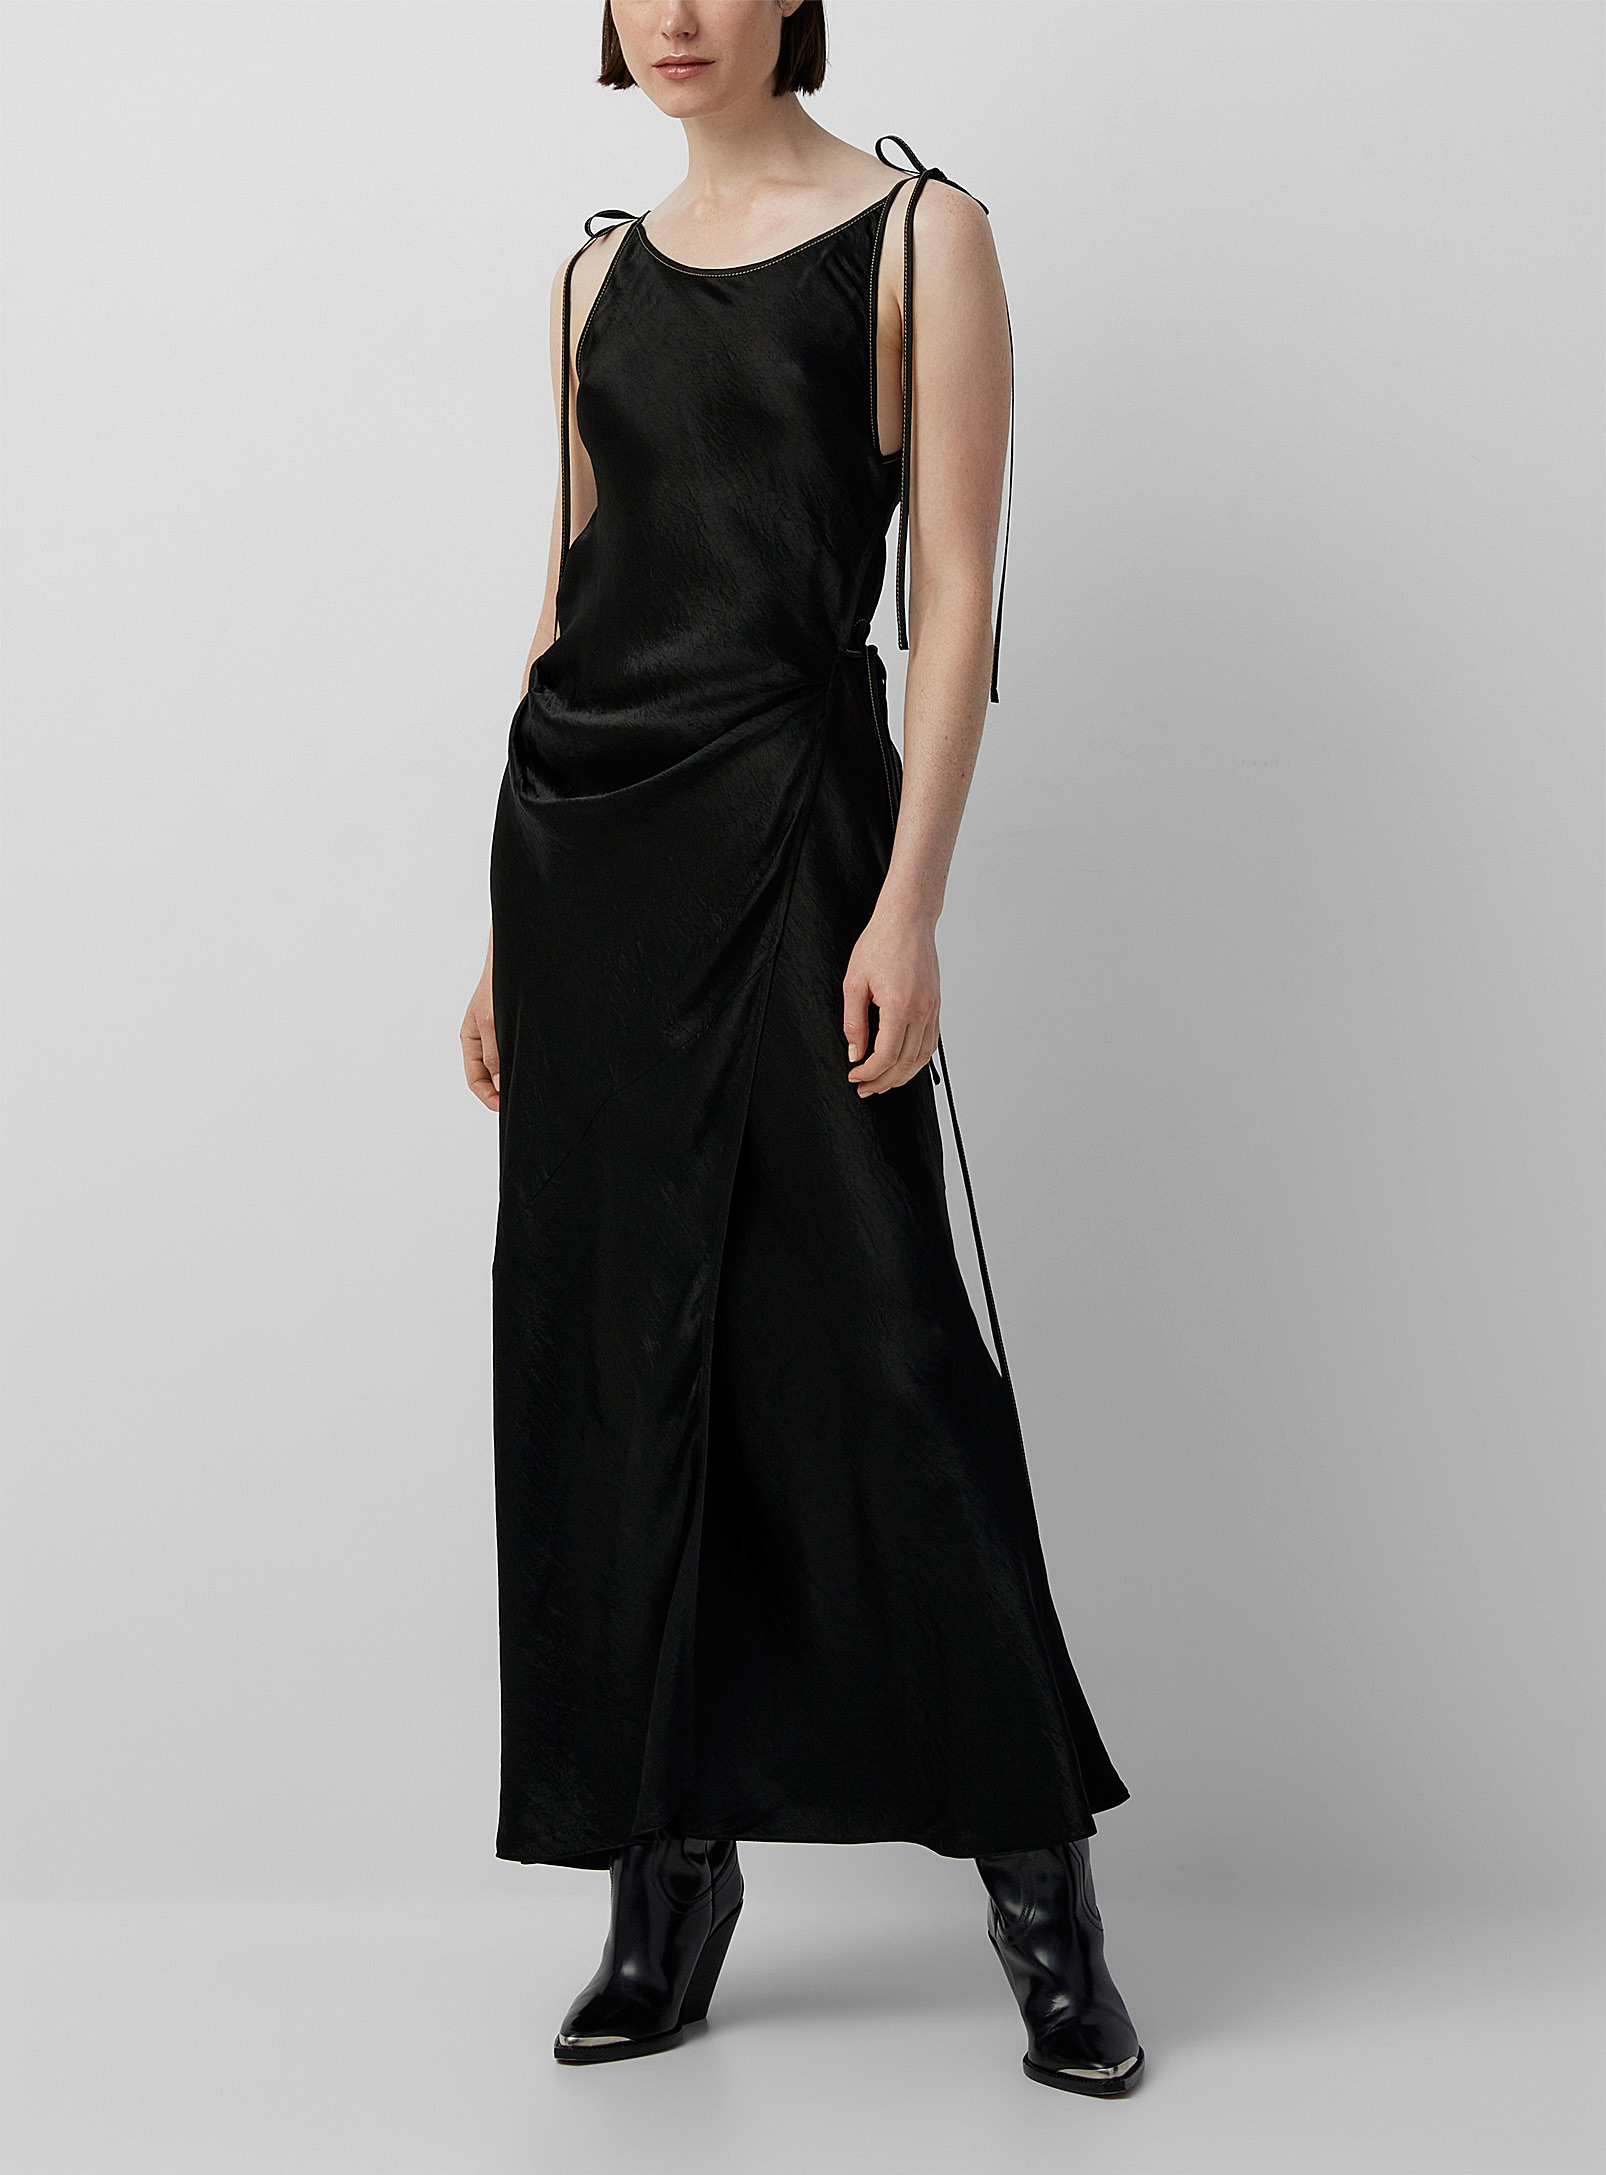 Acne Studios - Women's Thin straps satiny dress